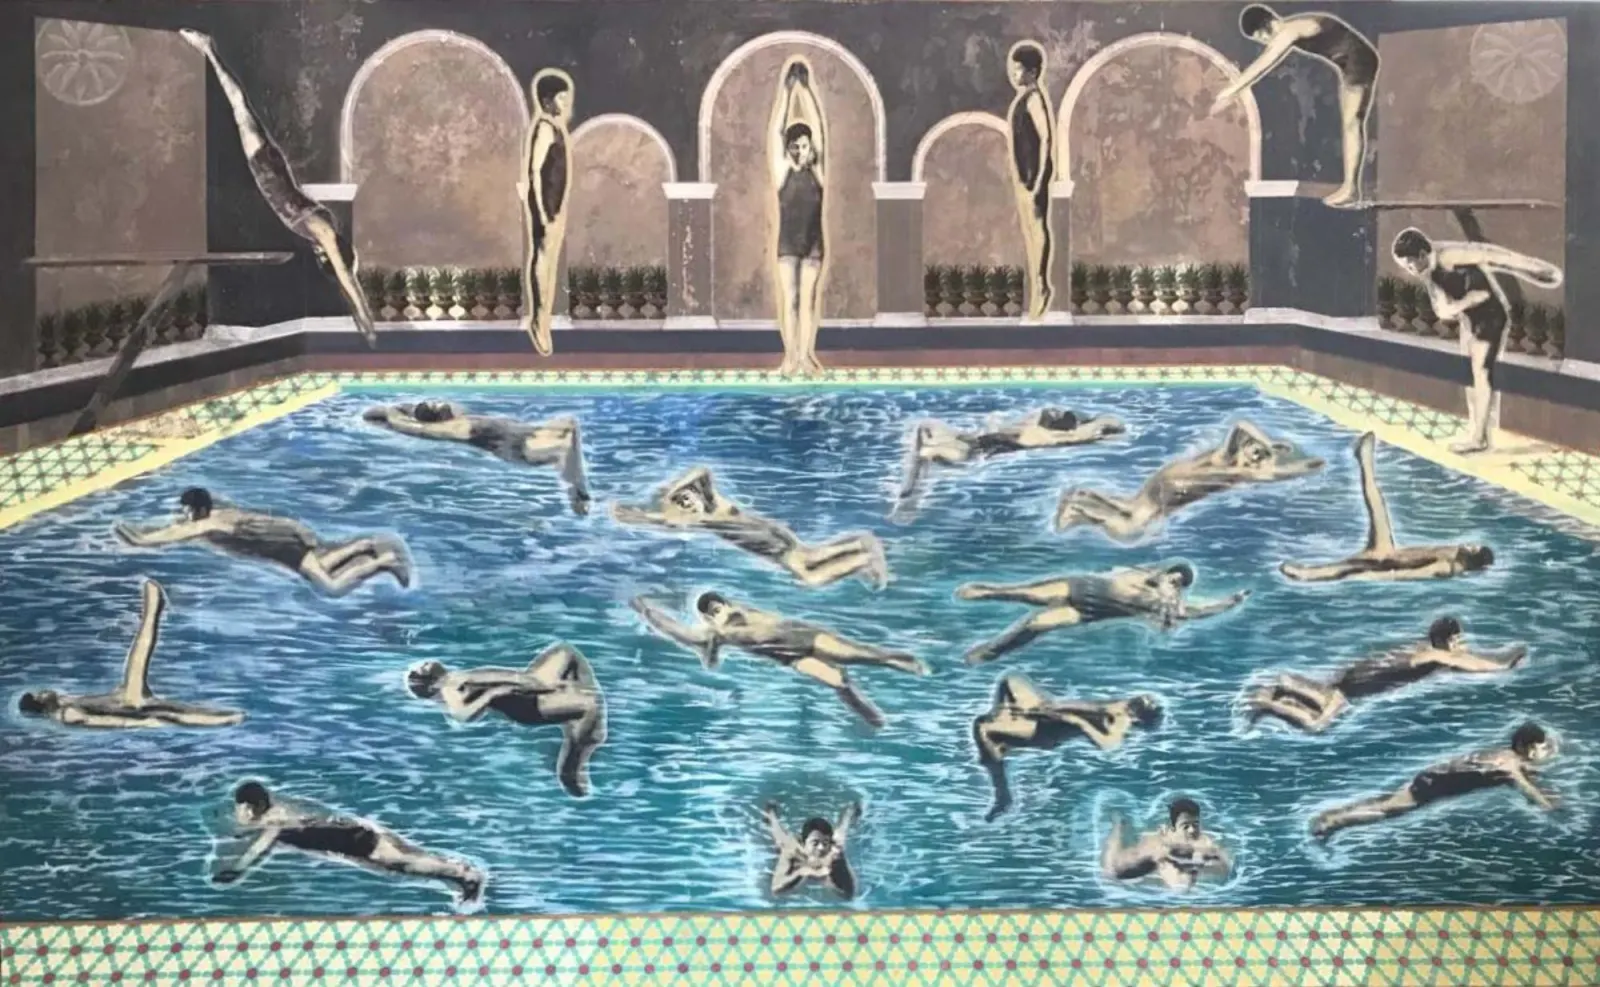 About the Artwork Sharma Nataraj. Swimmers Manual. 2018  by Nataraj Sharma